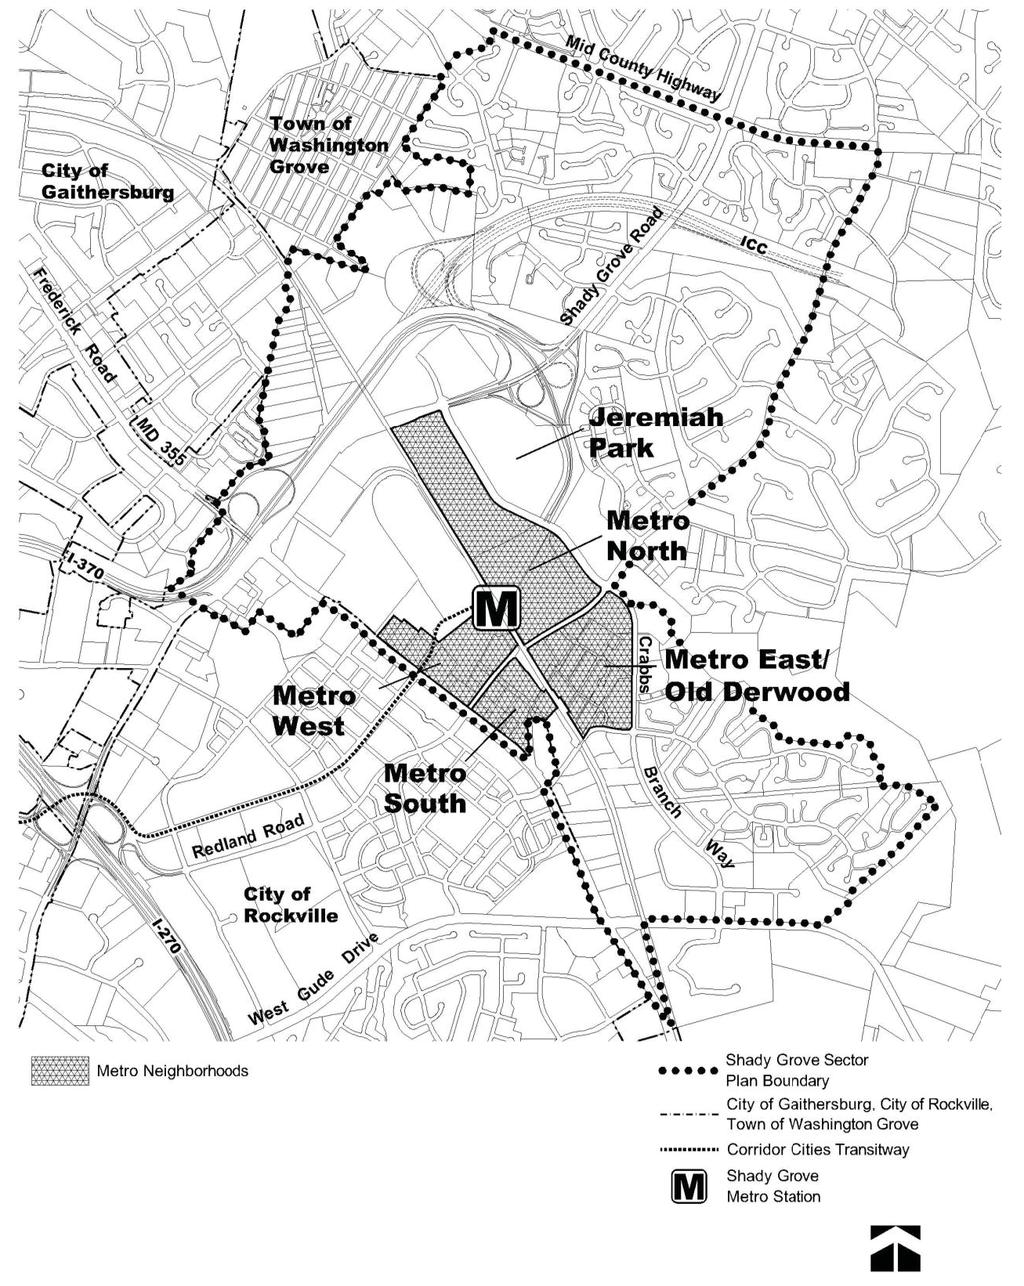 Figure 23: Shady Grove Metro Neighborhoods